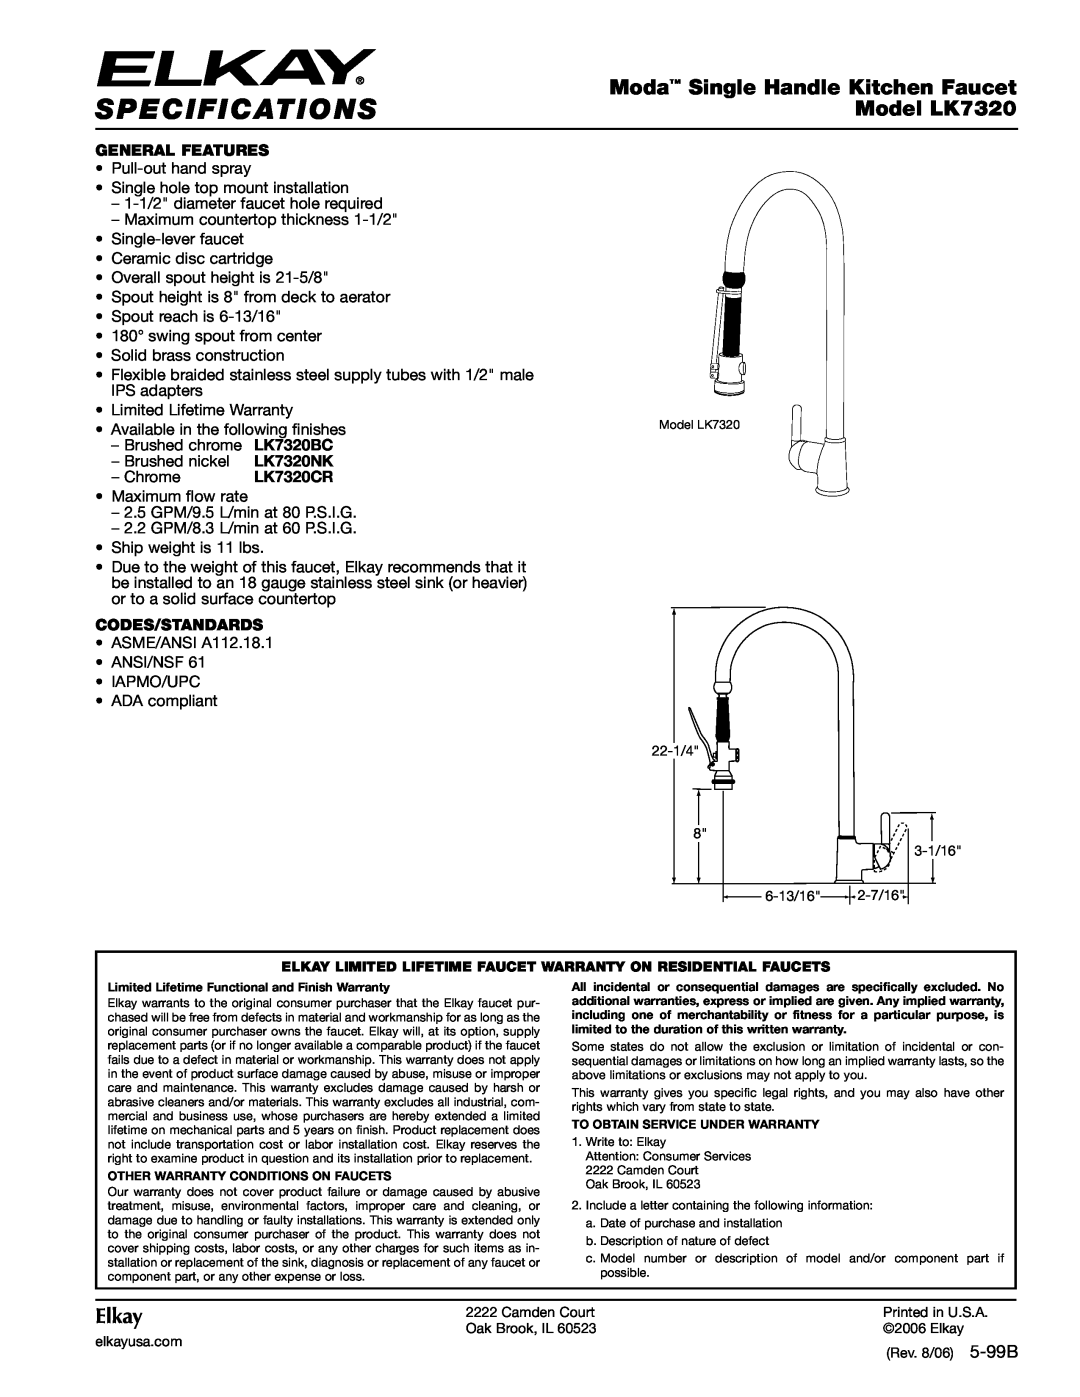 Elkay specifications Specifications, Moda Single Handle Kitchen Faucet, Model LK7320, Elkay, General Features, LK7320NK 